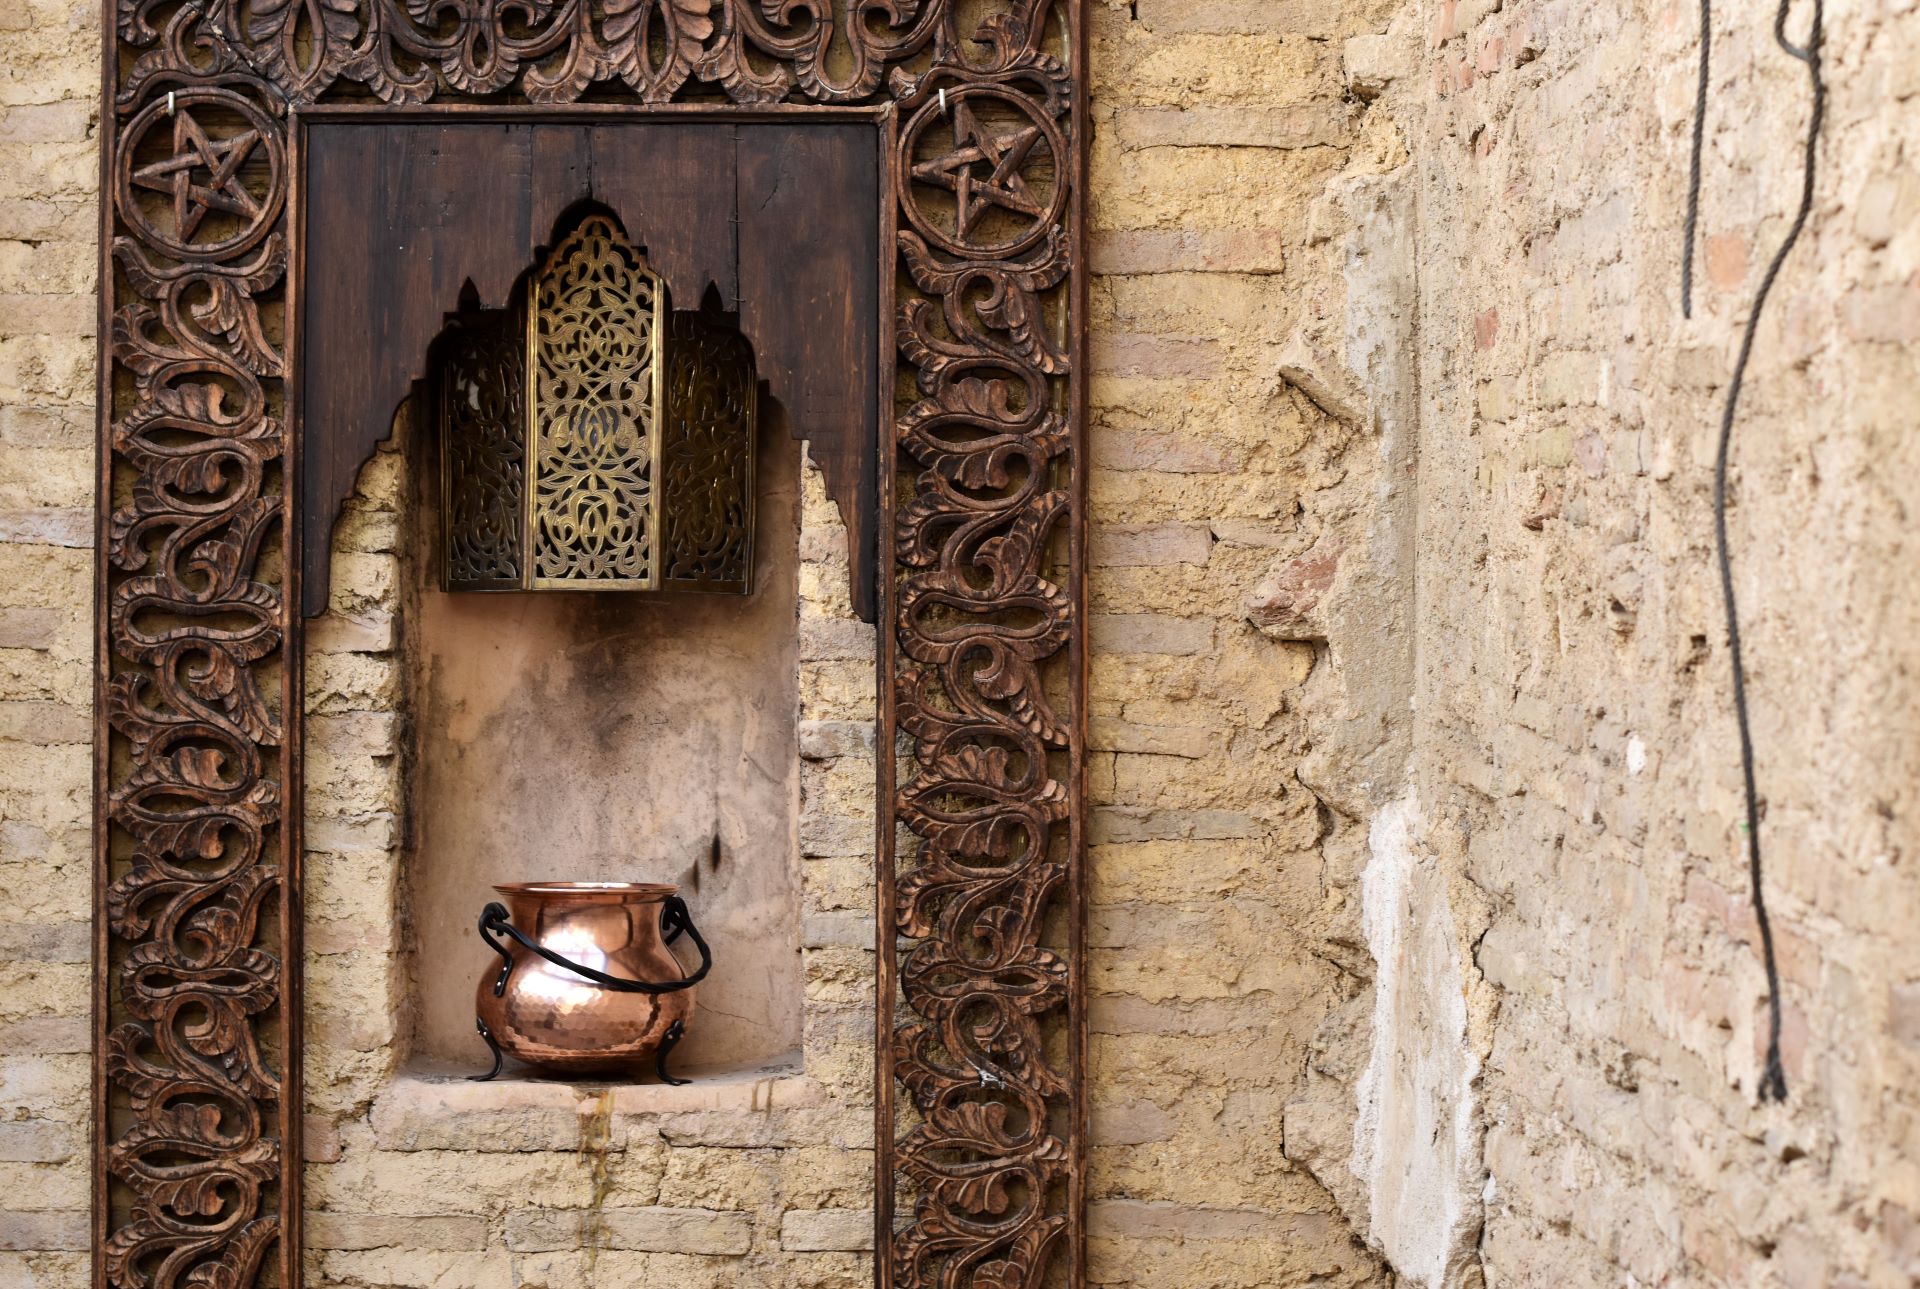 Moroccan architecture consolidates styles of Moorish, Islamic, Berber